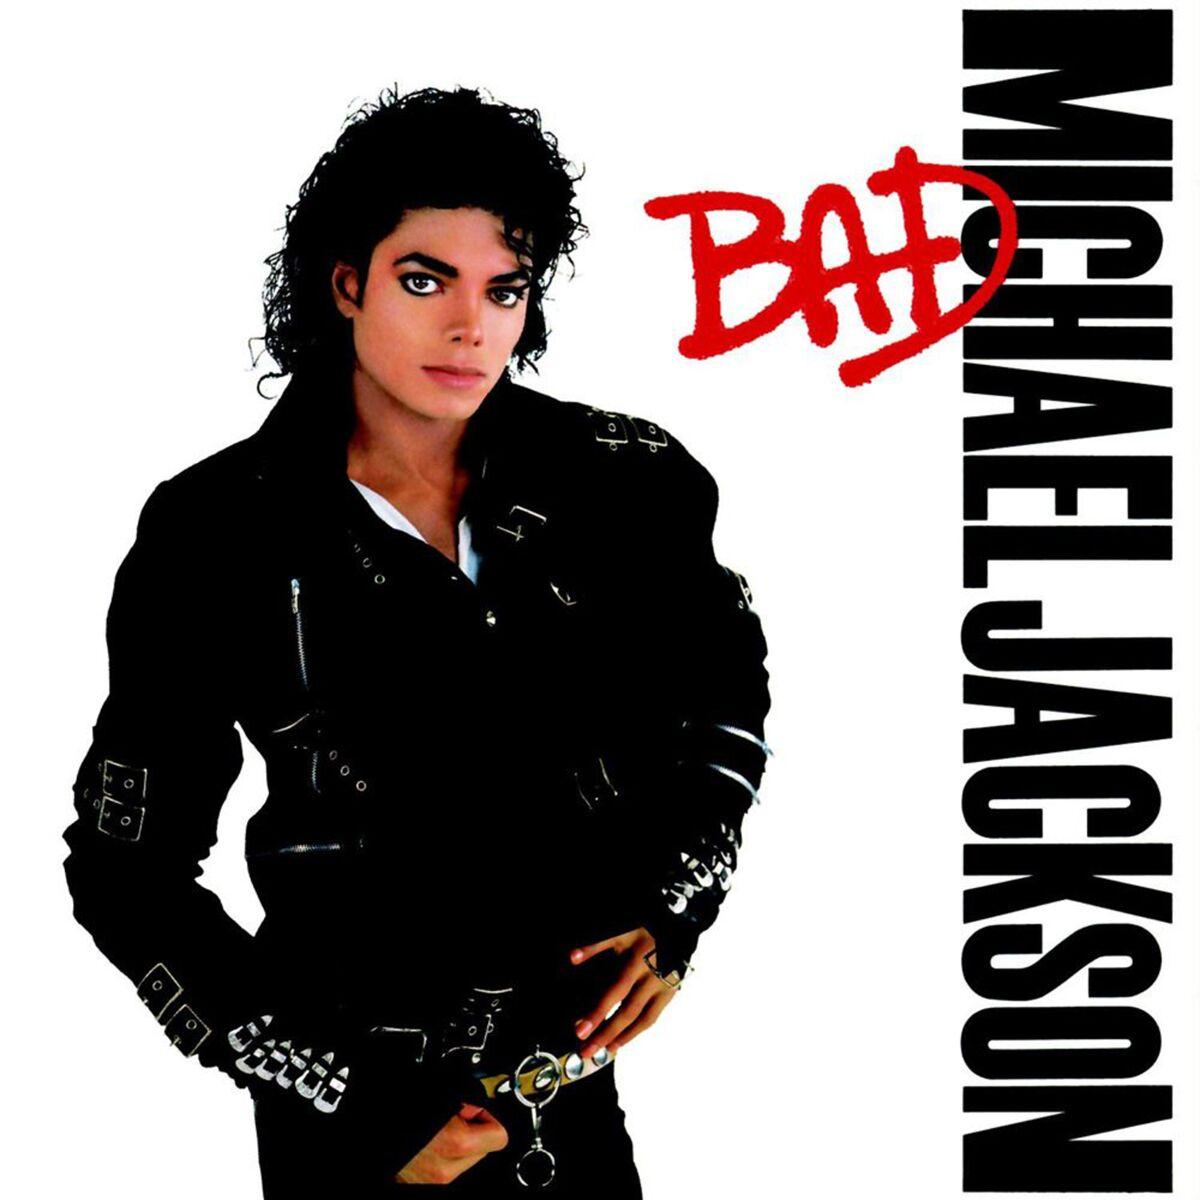 Jackson Michael Bad LP